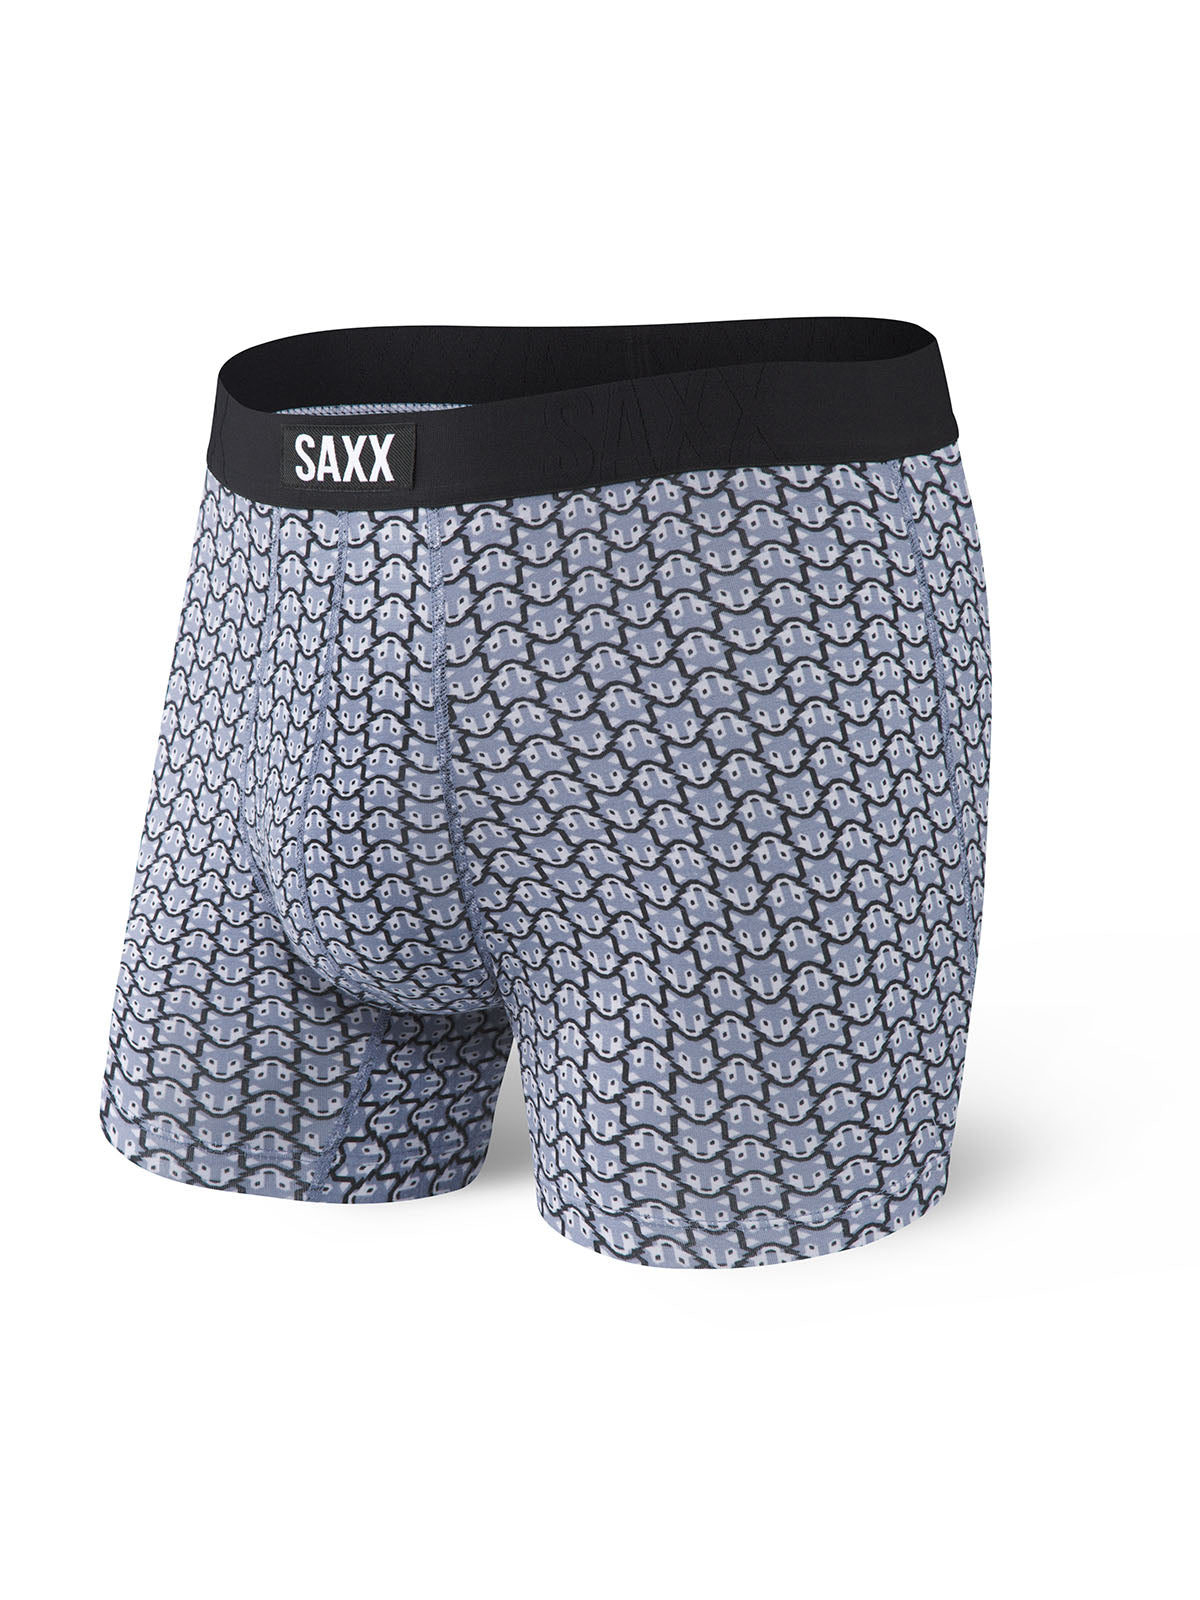 Saxx Underwear Men's Trunk Underwear – Undercover Men's Underwear –Trunk  Briefs with Fly and Built-in Ballpark Pouch Support,Grey Heather,Large :  : Clothing, Shoes & Accessories